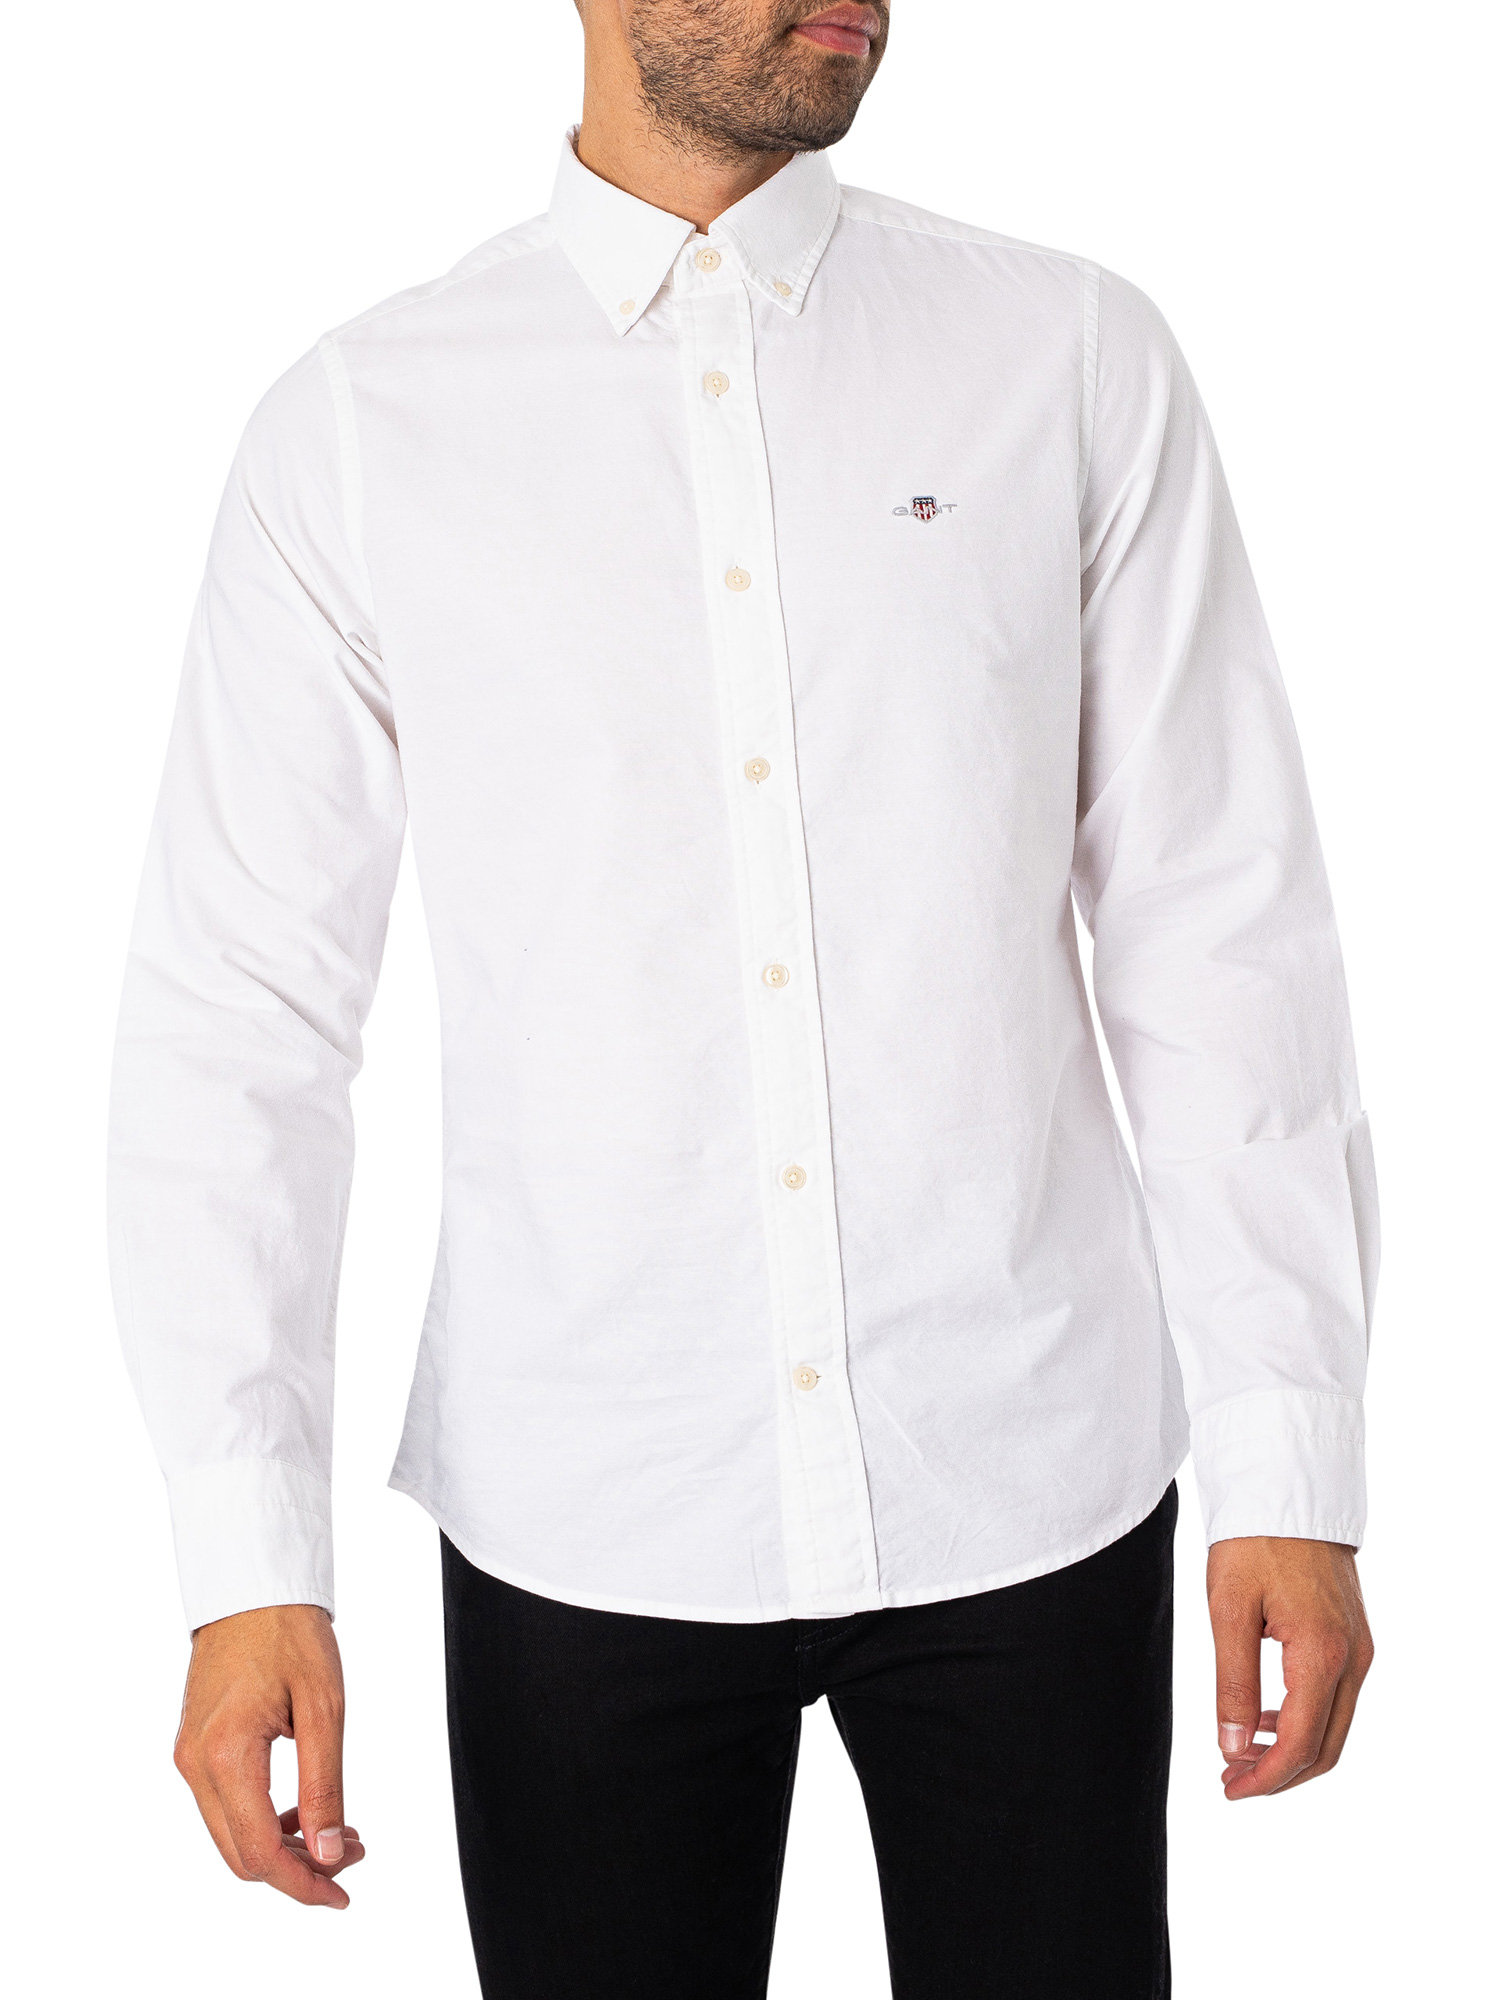 GANT Slim Fit Oxford Shirt - White | Standout